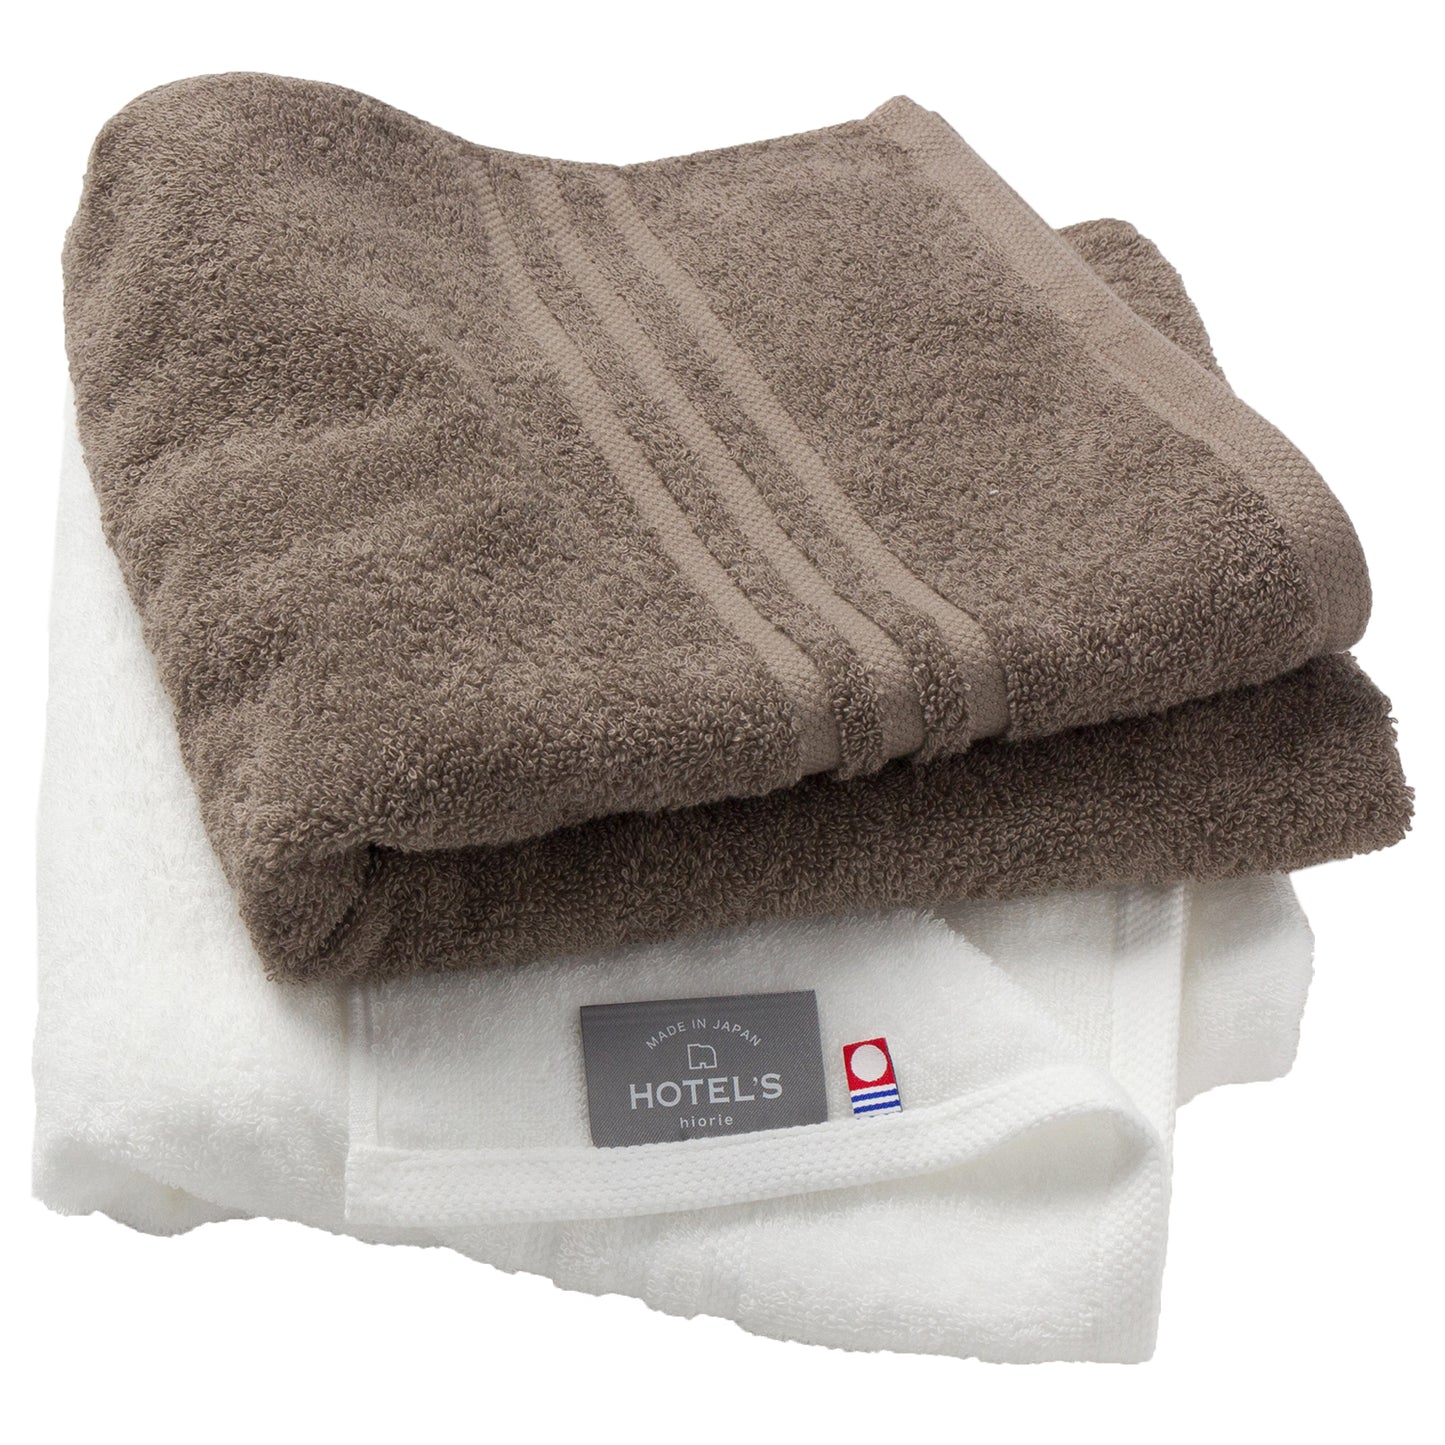 Hiorie Imabari Towel Soft Hotel's Fluffy Mini Bath Towel 2 Sheets cotton Japan